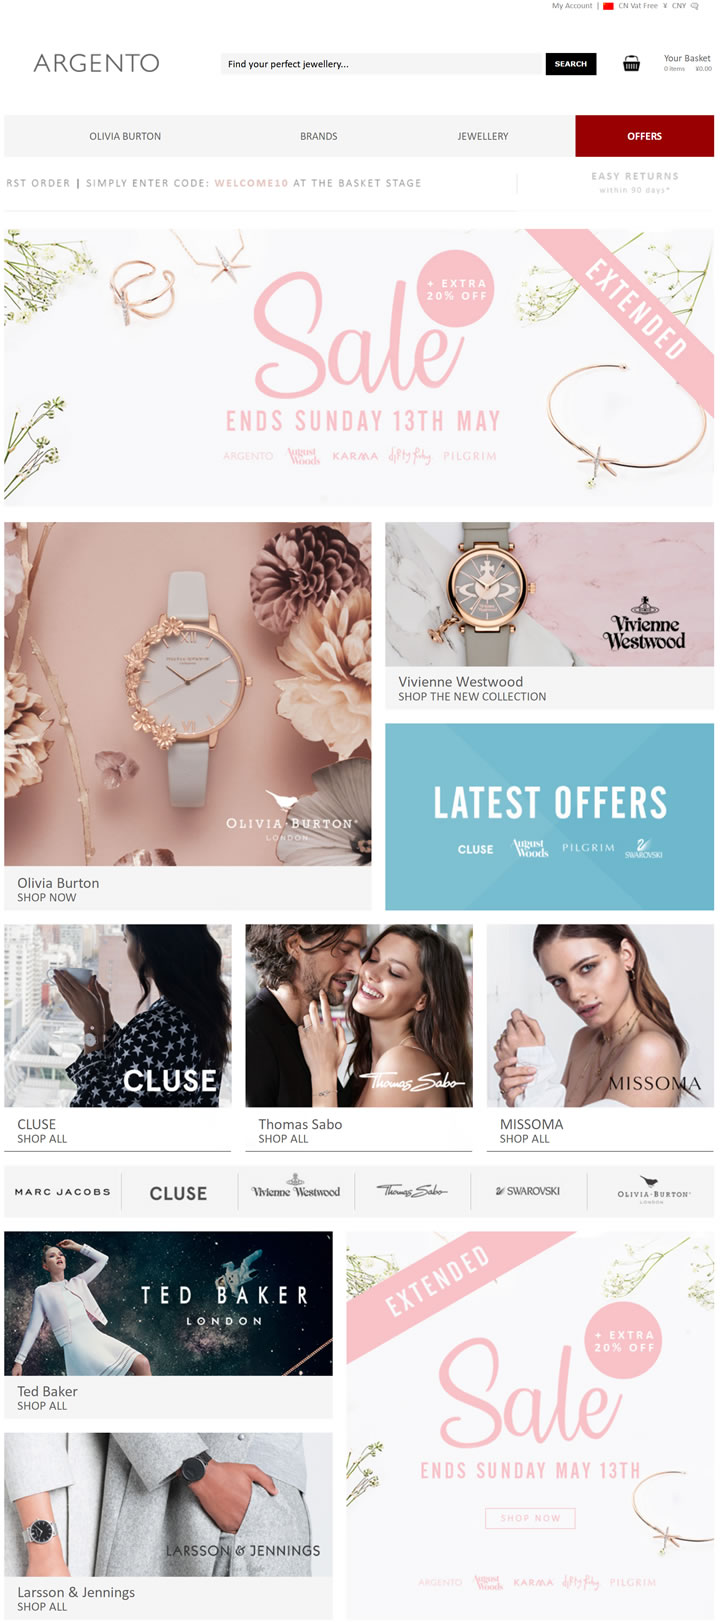 Global Online Jewellery and Watch Retailer：Argento